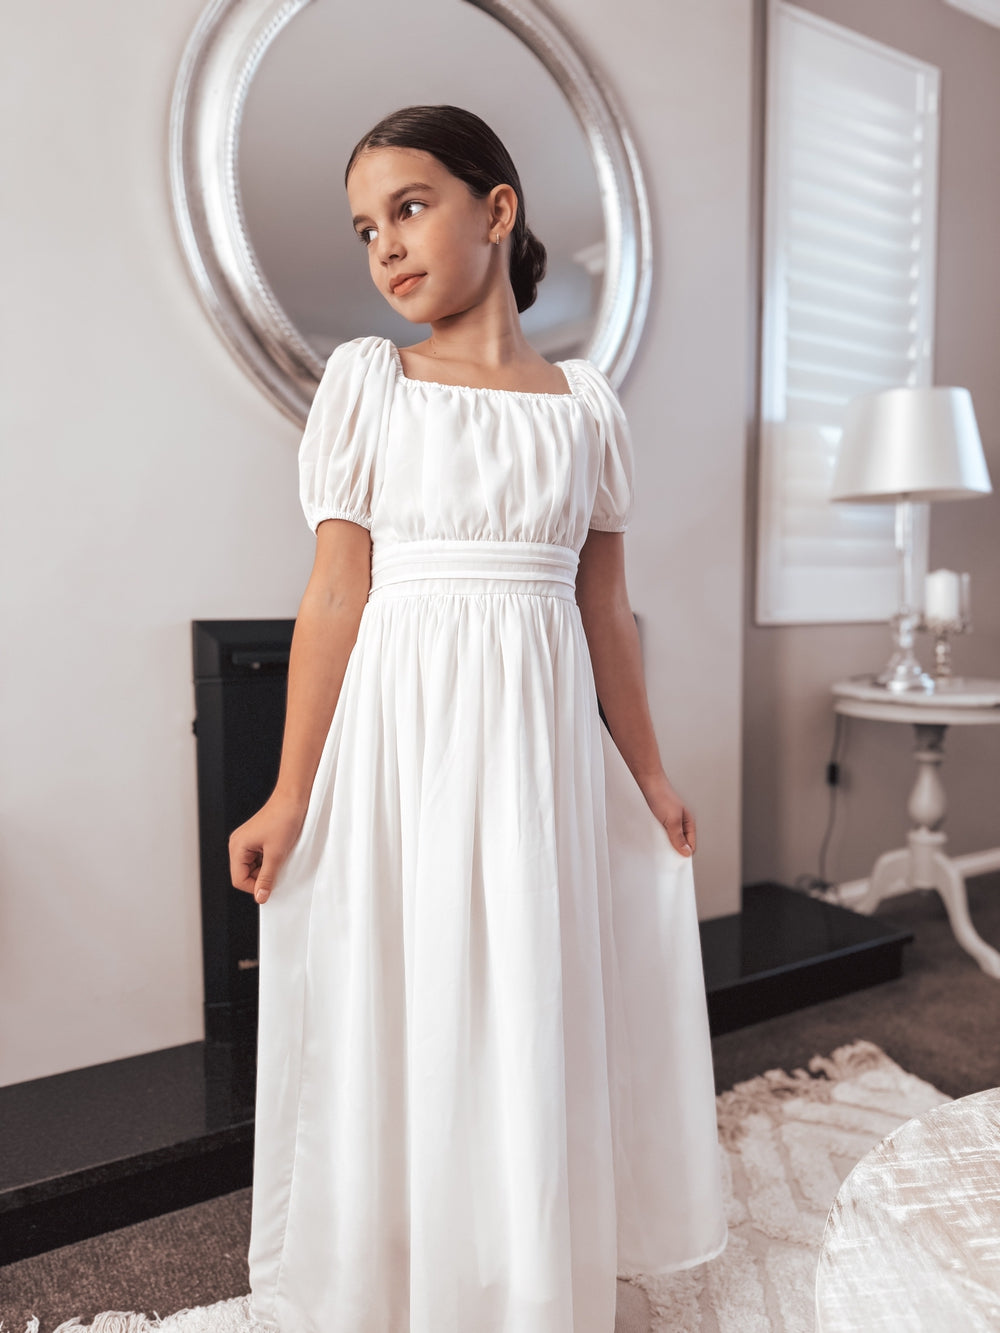 Emilia Girls White Dress - Girls Boho Dresses